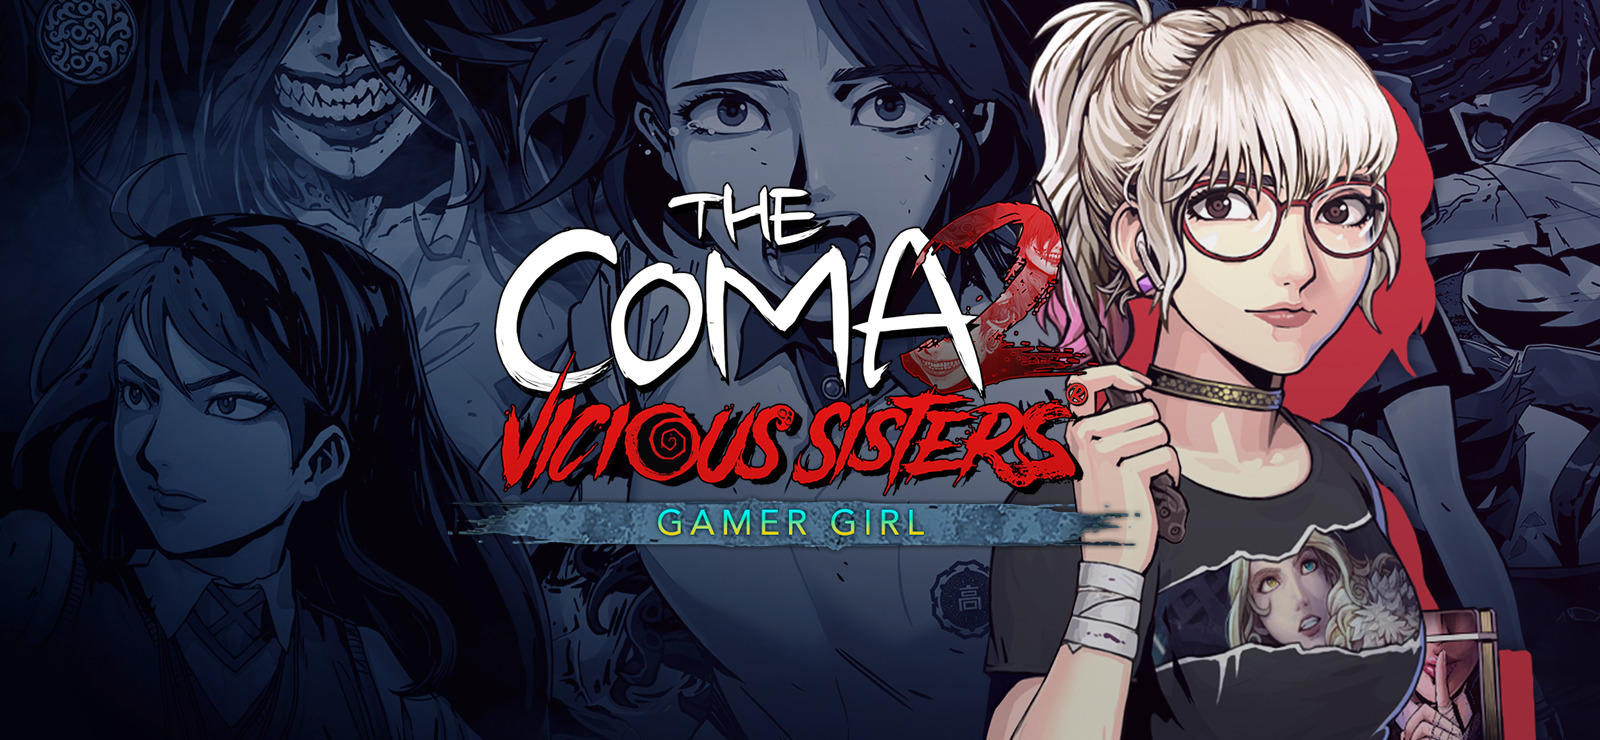 Coma vicious sisters